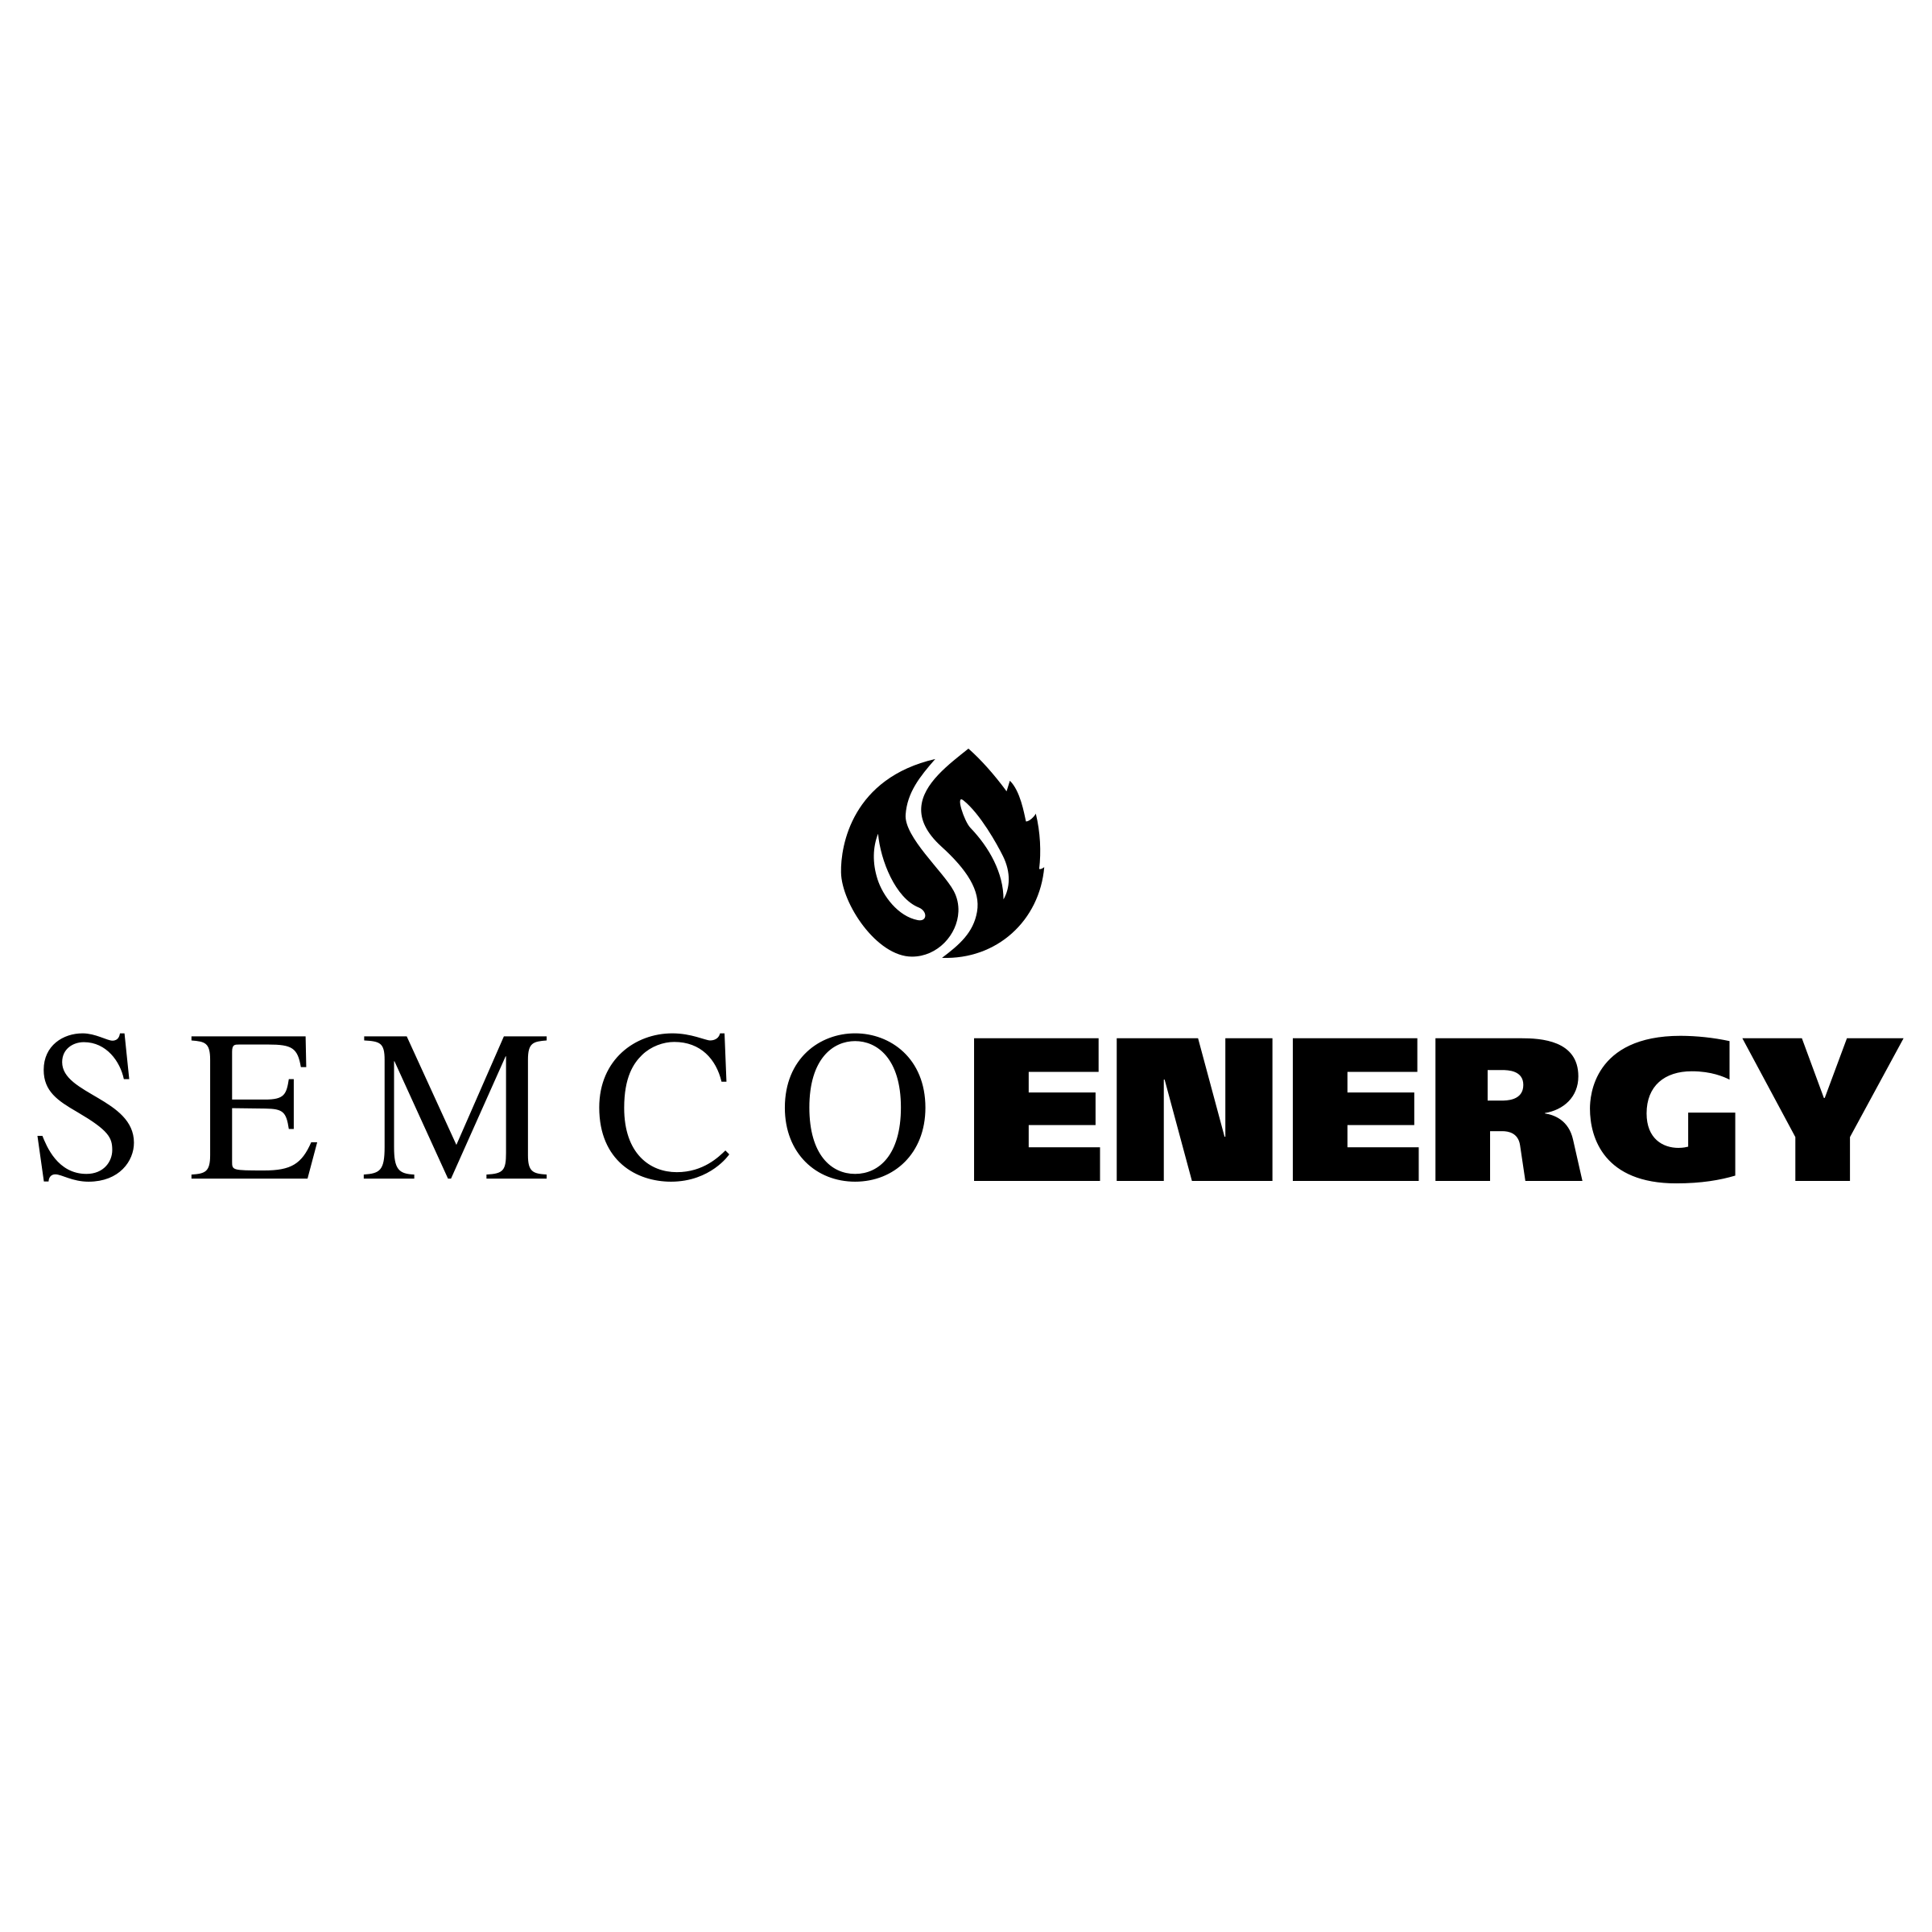 Semco Logo - Semco Energy Logo PNG Transparent & SVG Vector